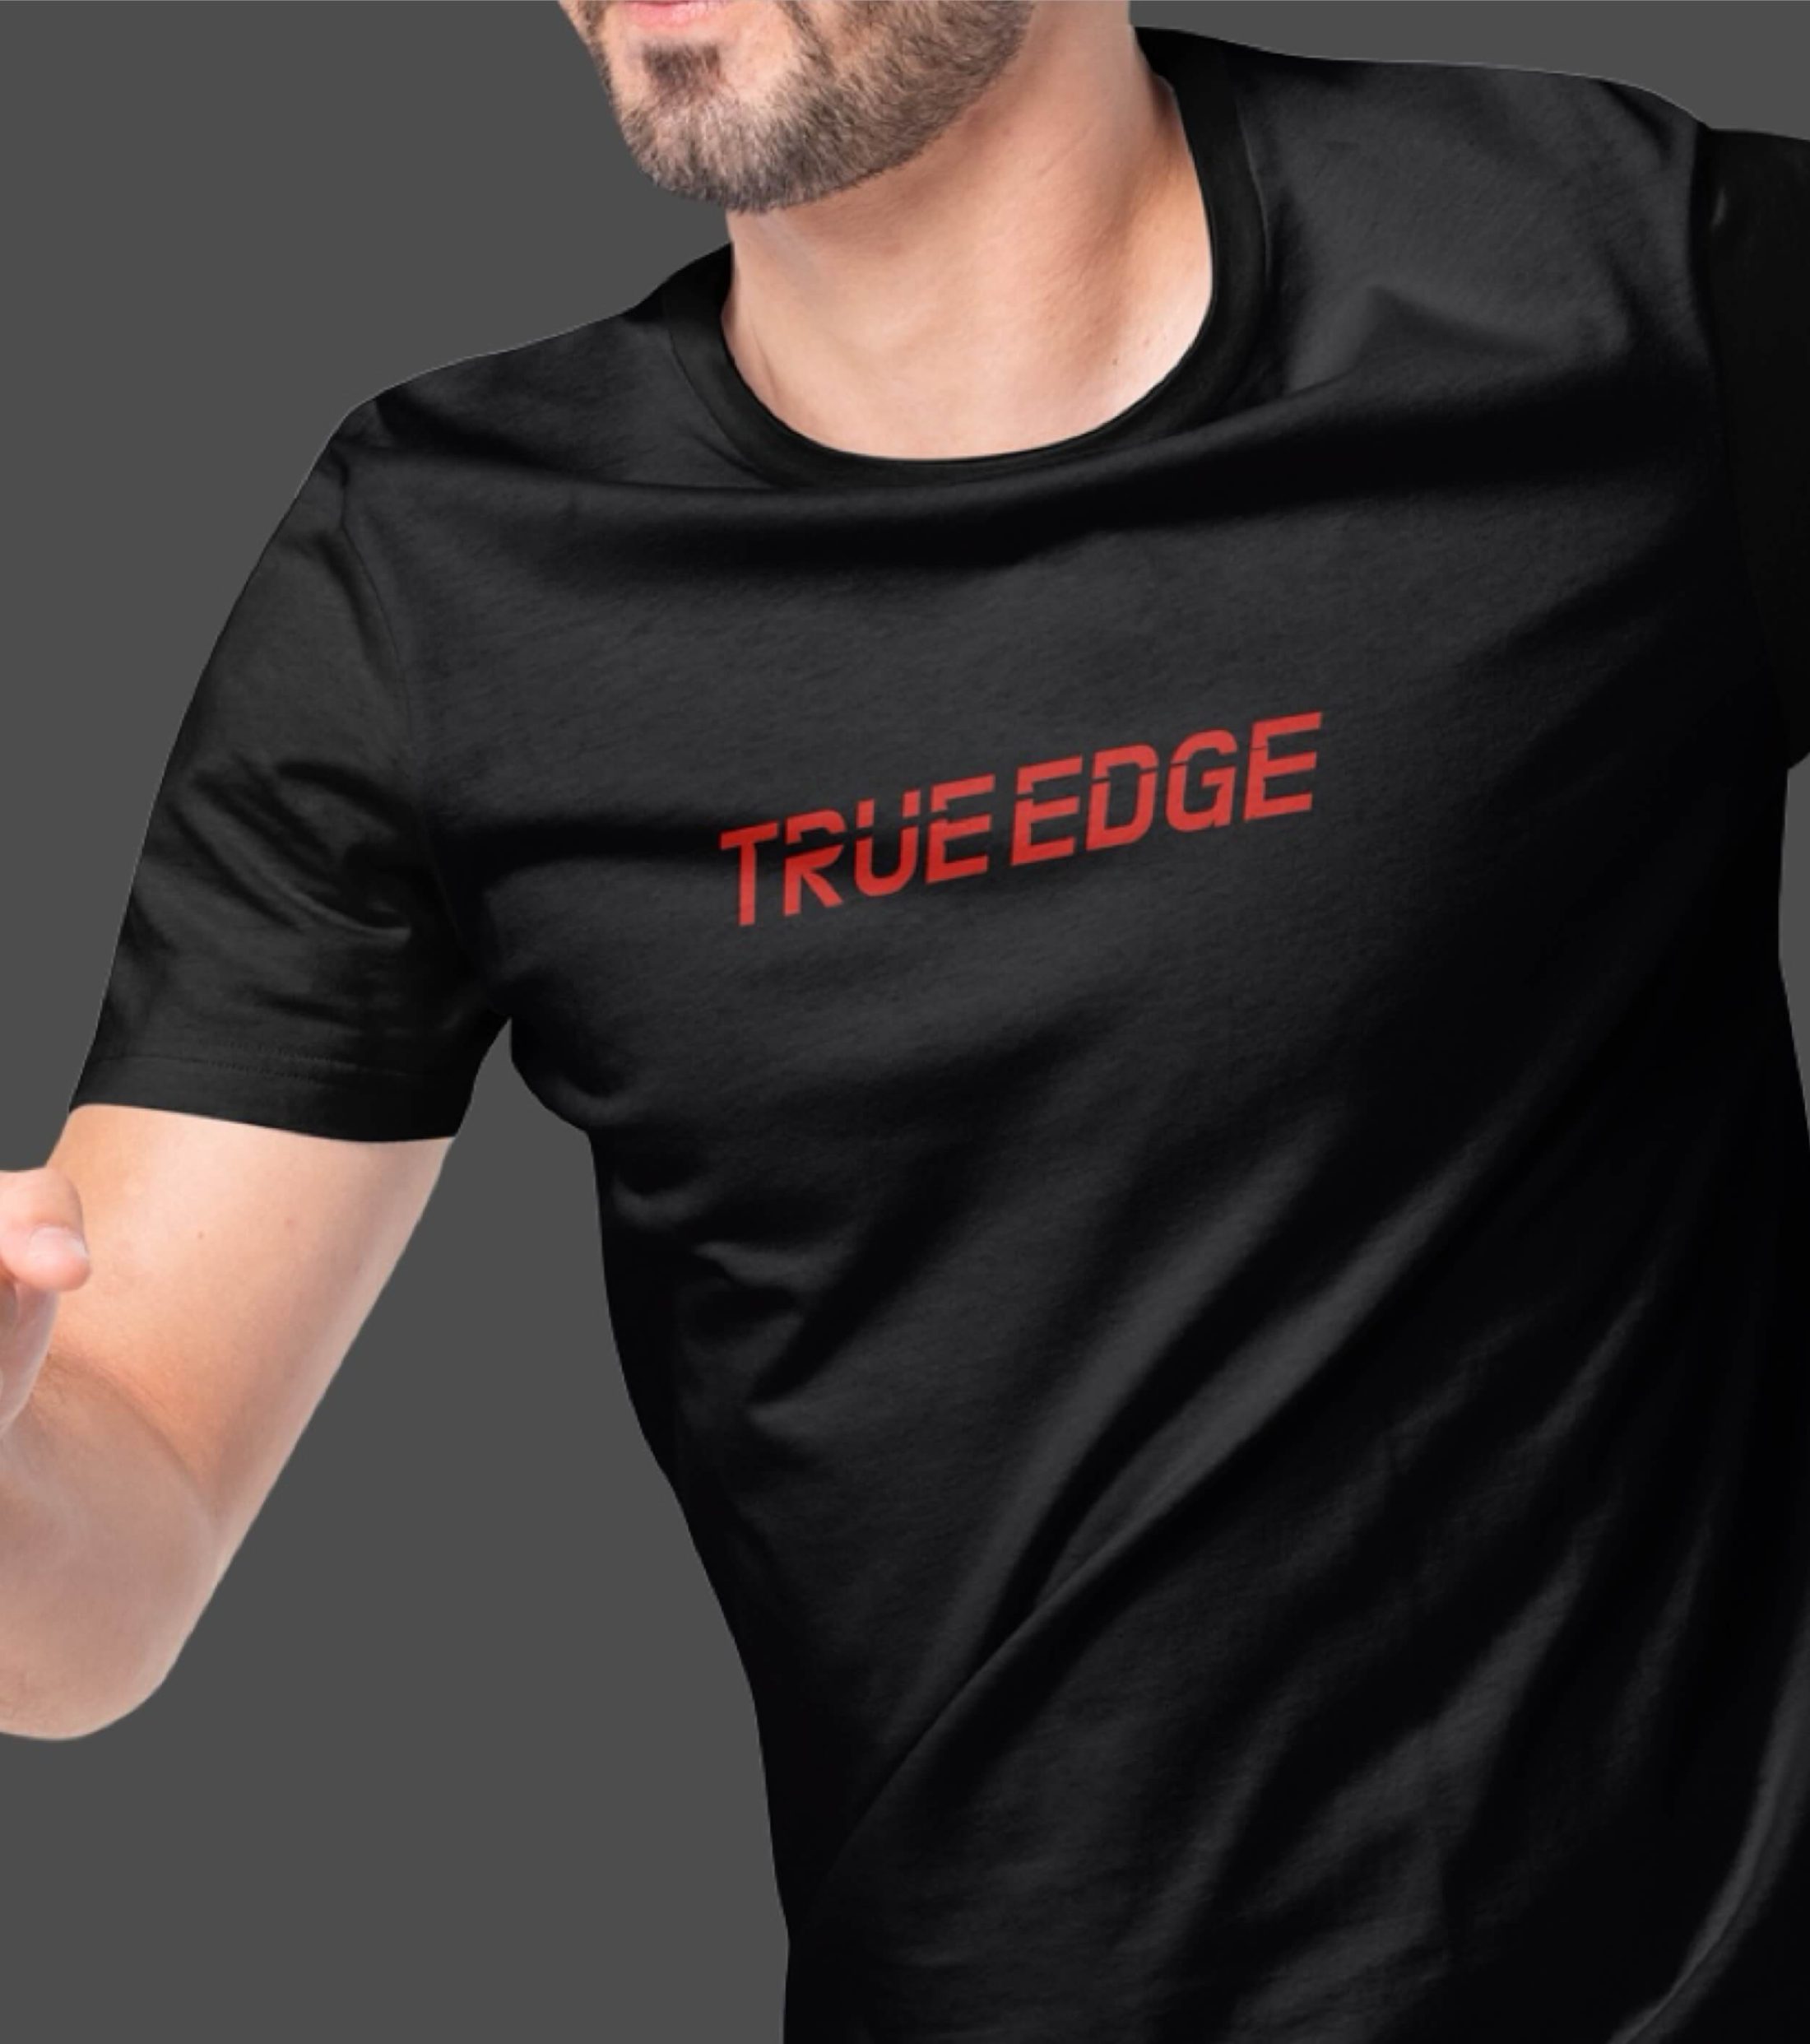 True Edge London Web Design 4